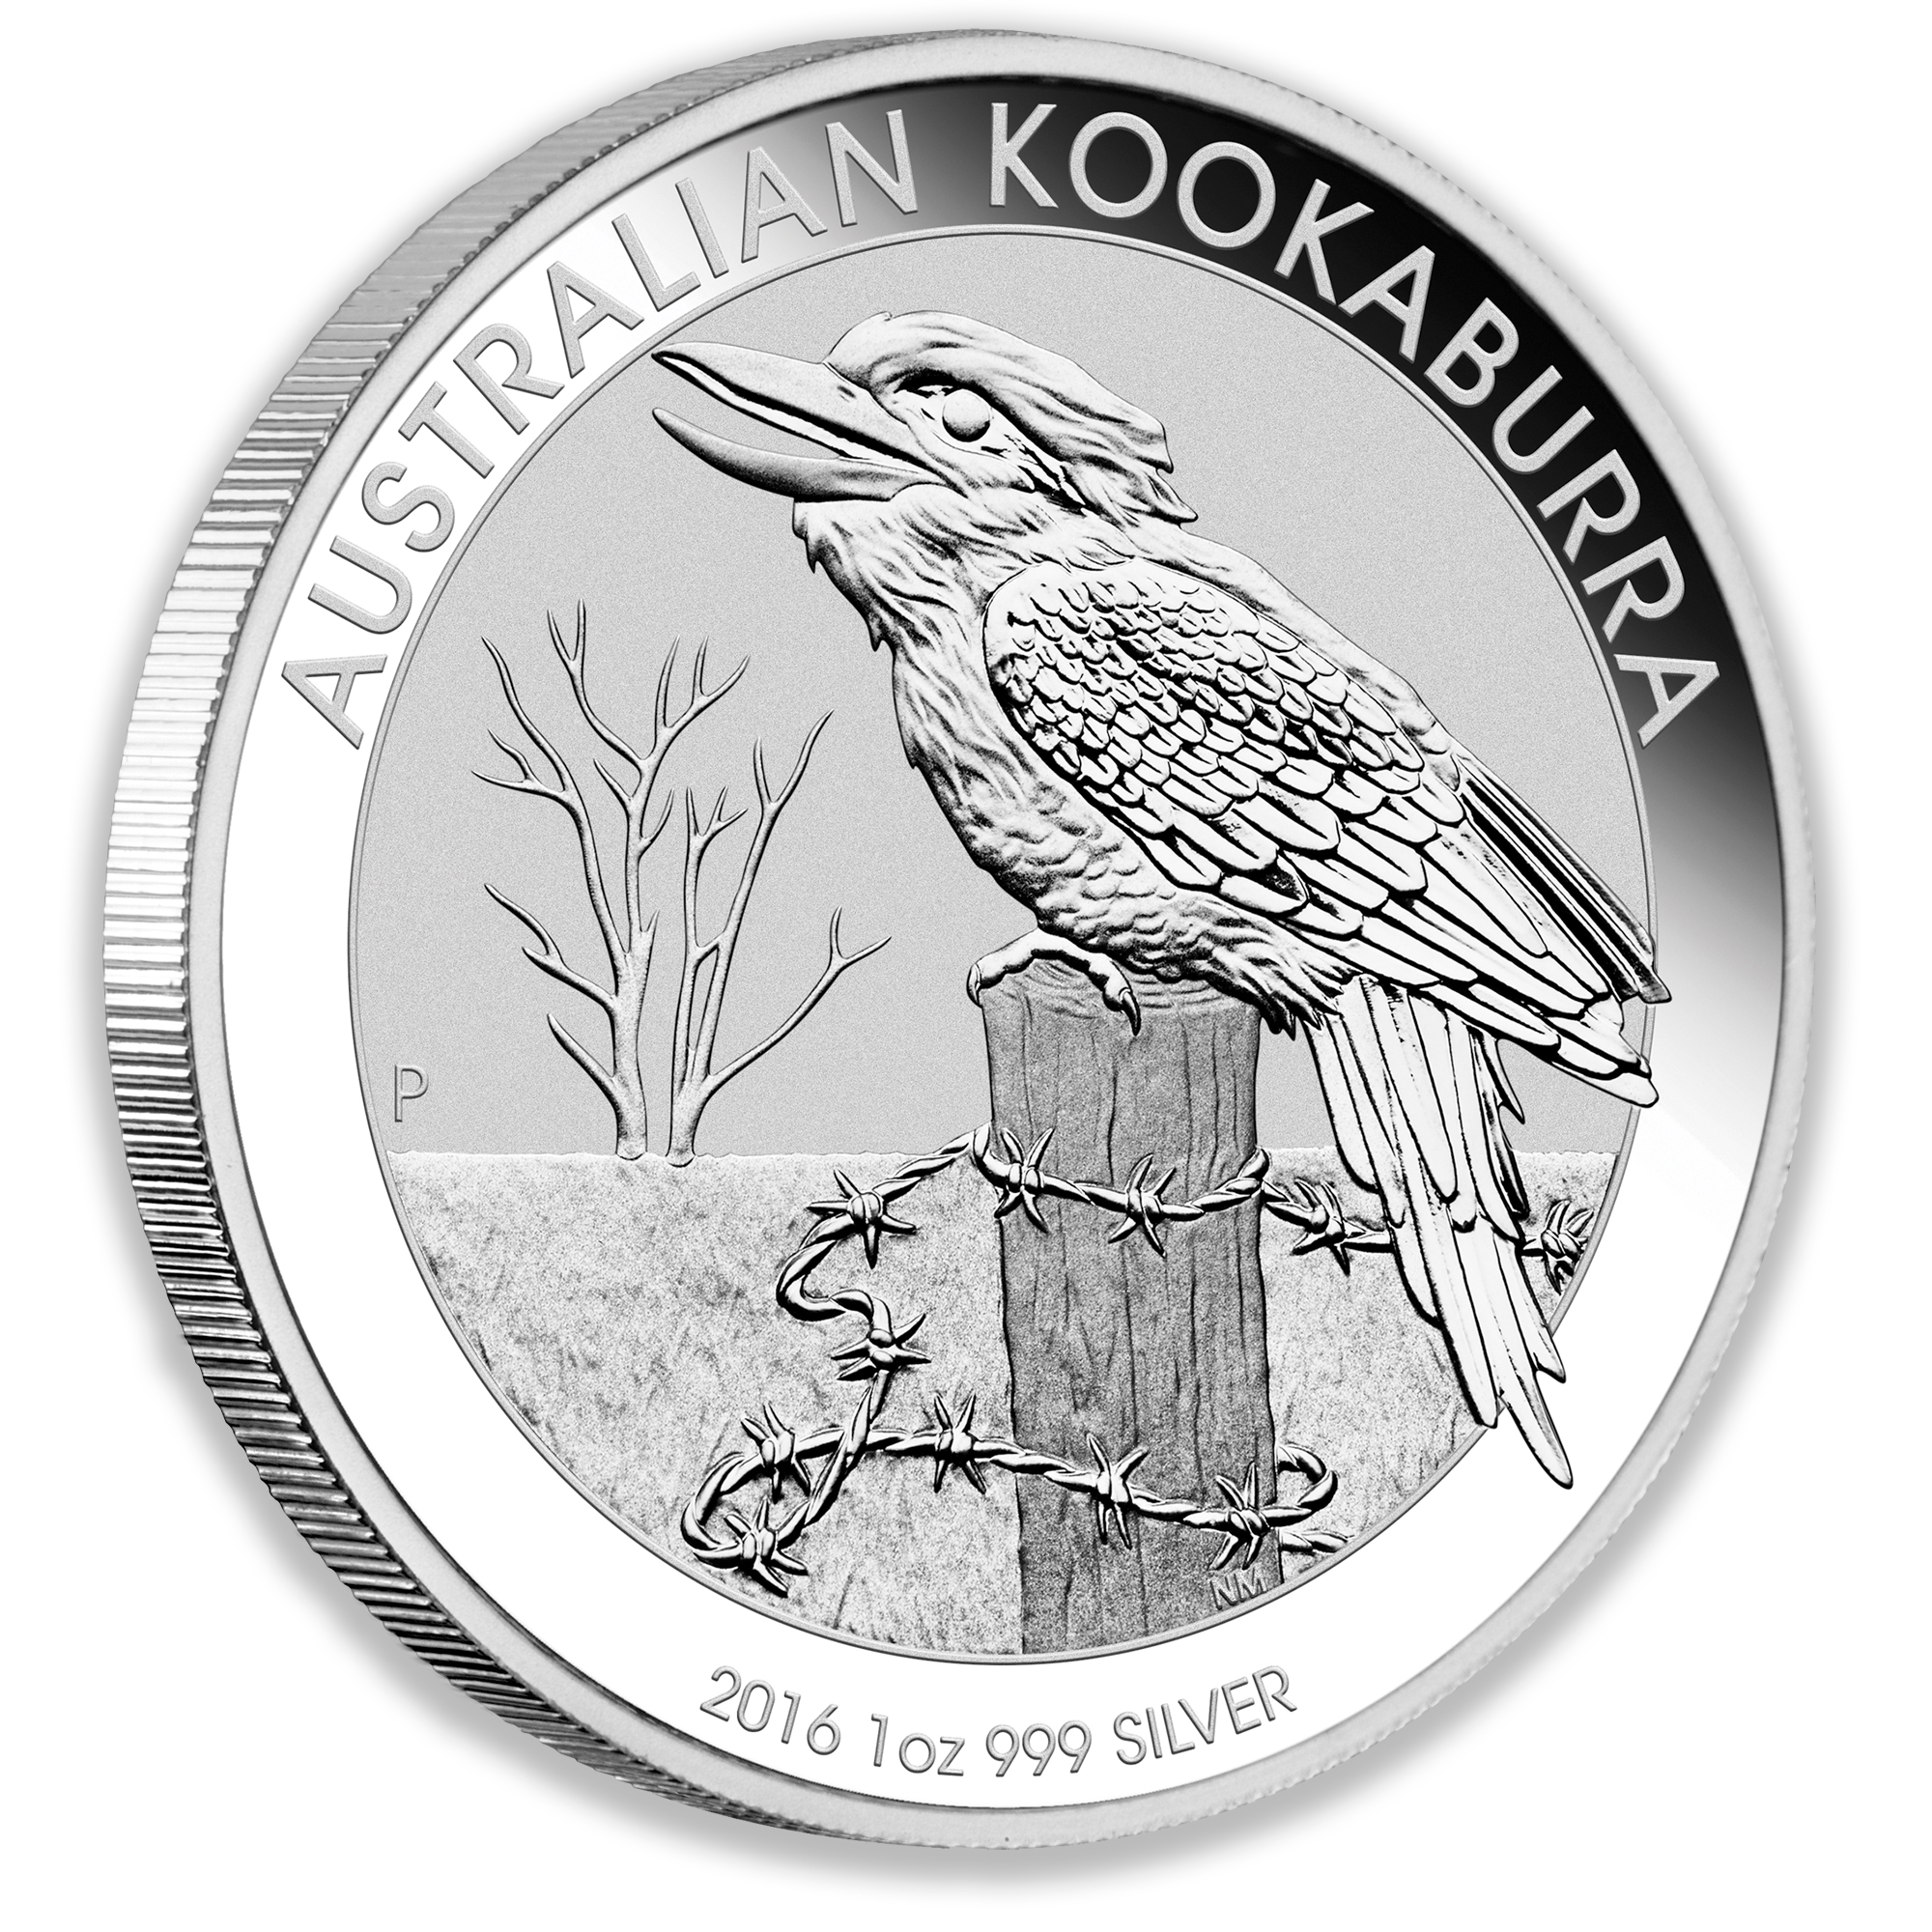 2016 1oz Perth Mint Silver Kookaburra Coin